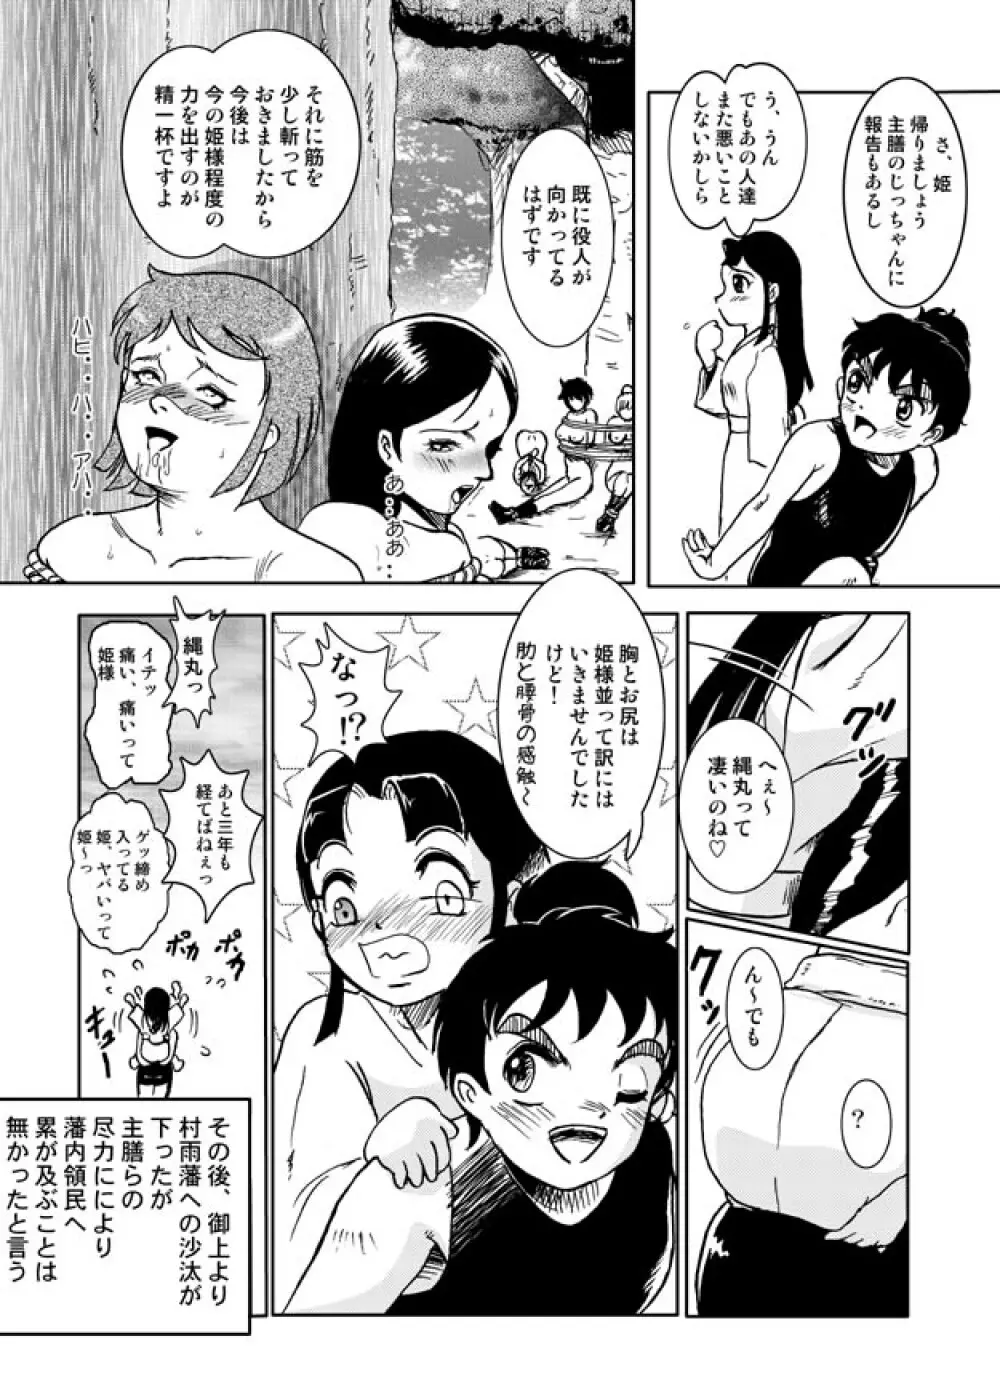 Same-themed manga about kid fighting female ninjas from japanese imageboard. 17ページ